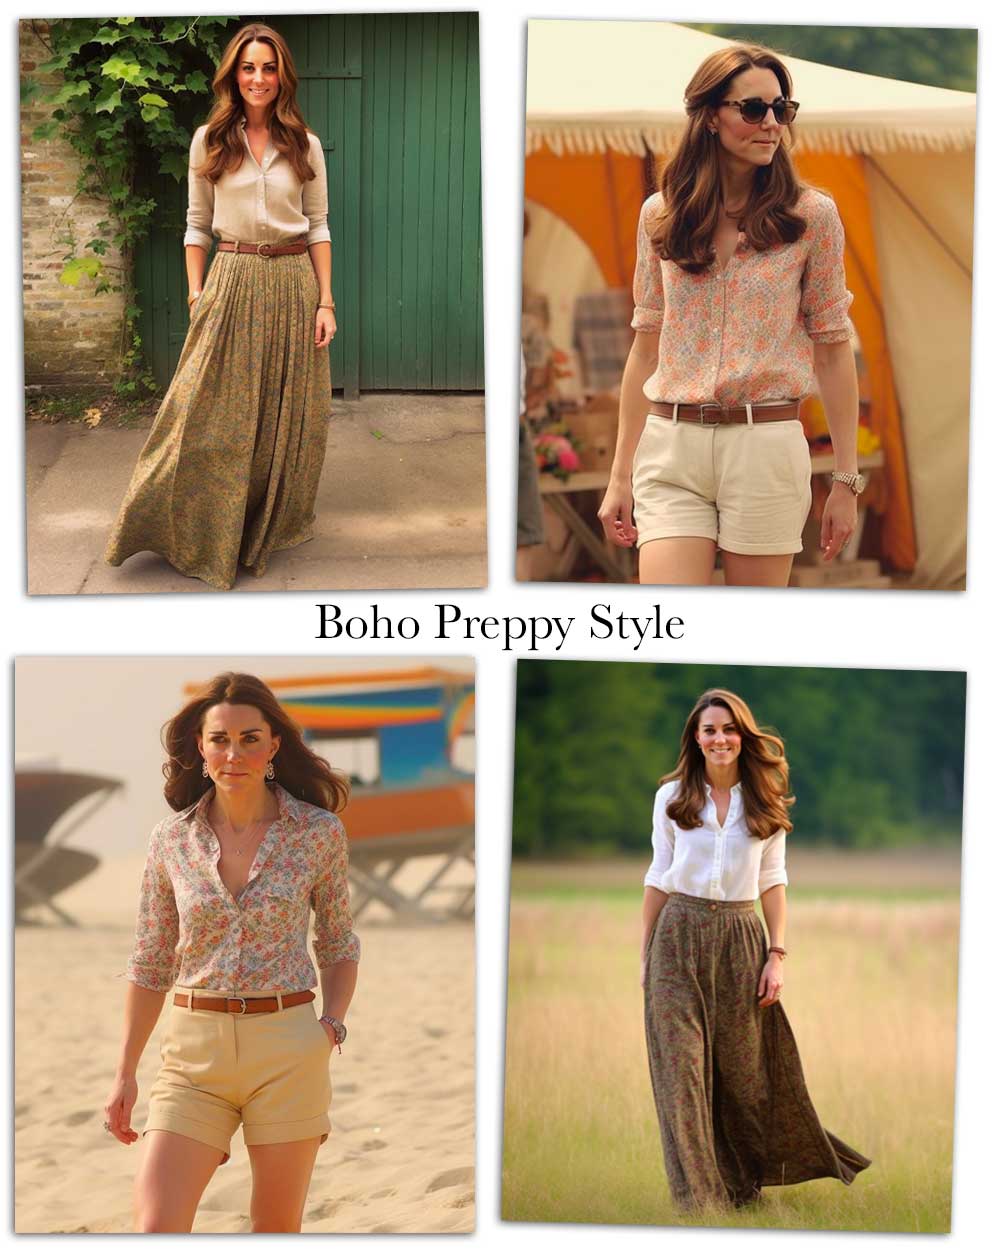 Boho Preppy style clothing